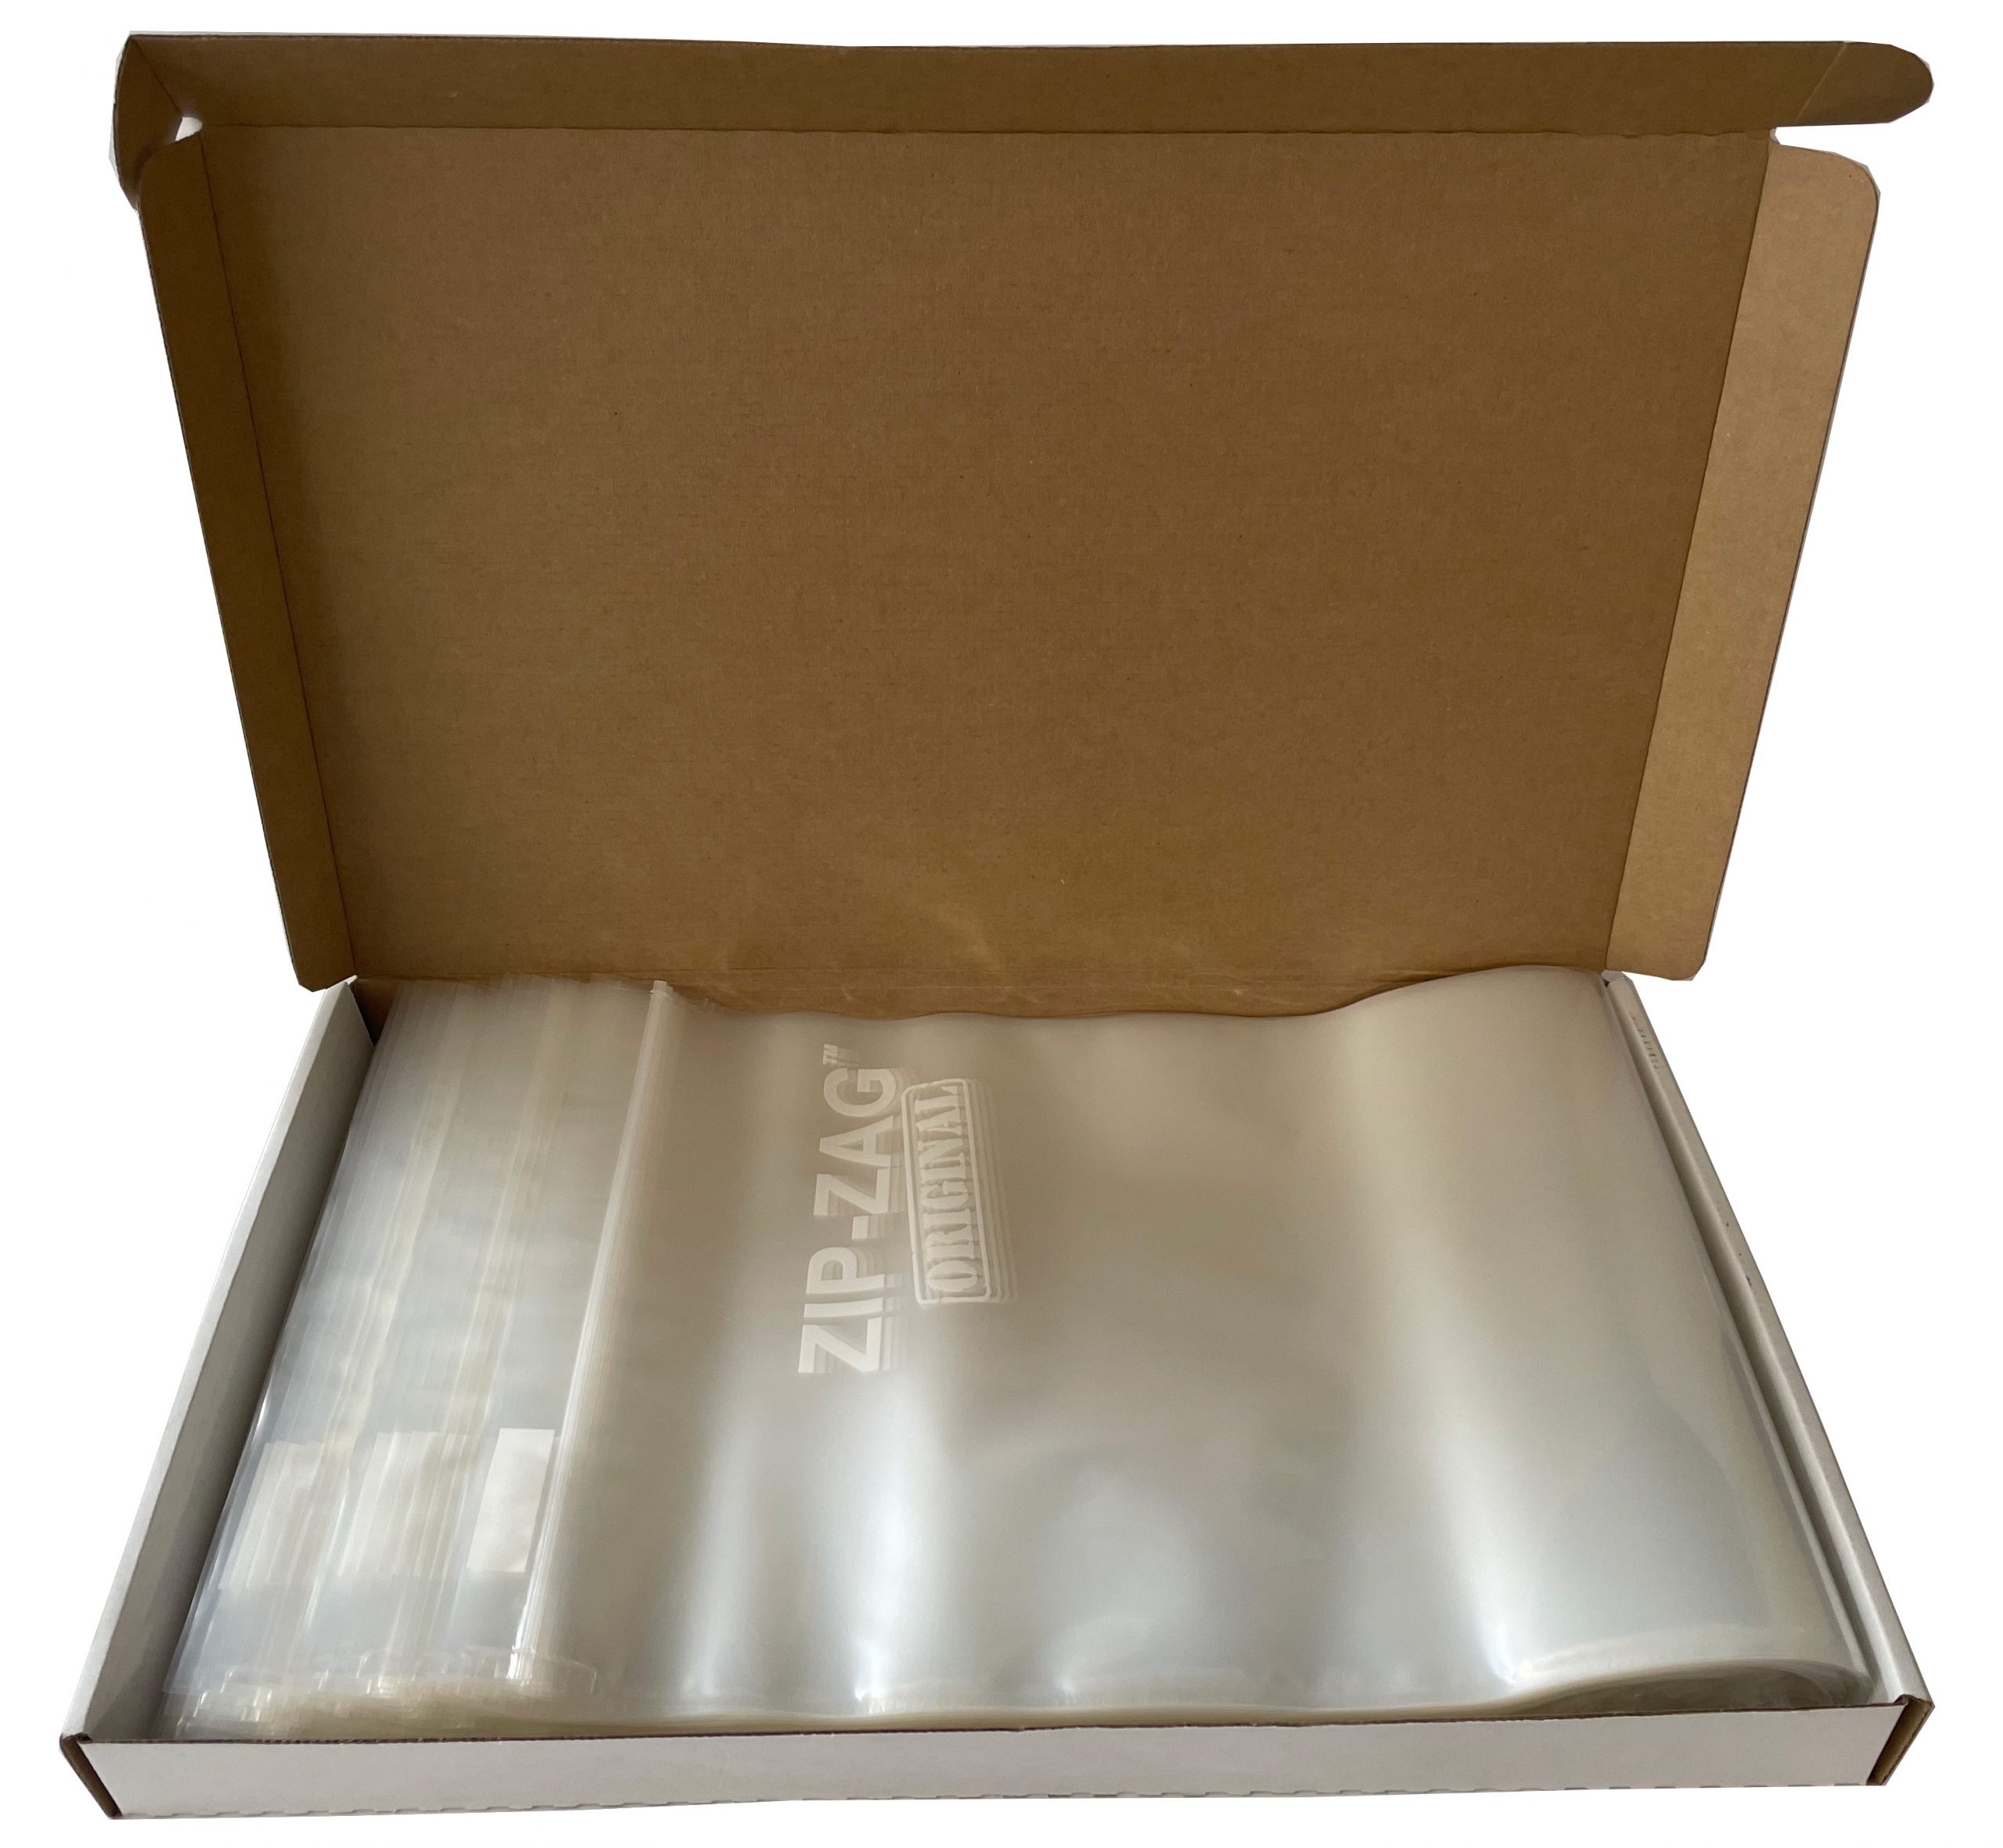 Zip Zag Bag Large 50 pack (1/2 lb) Smell Proof Reusable Bag